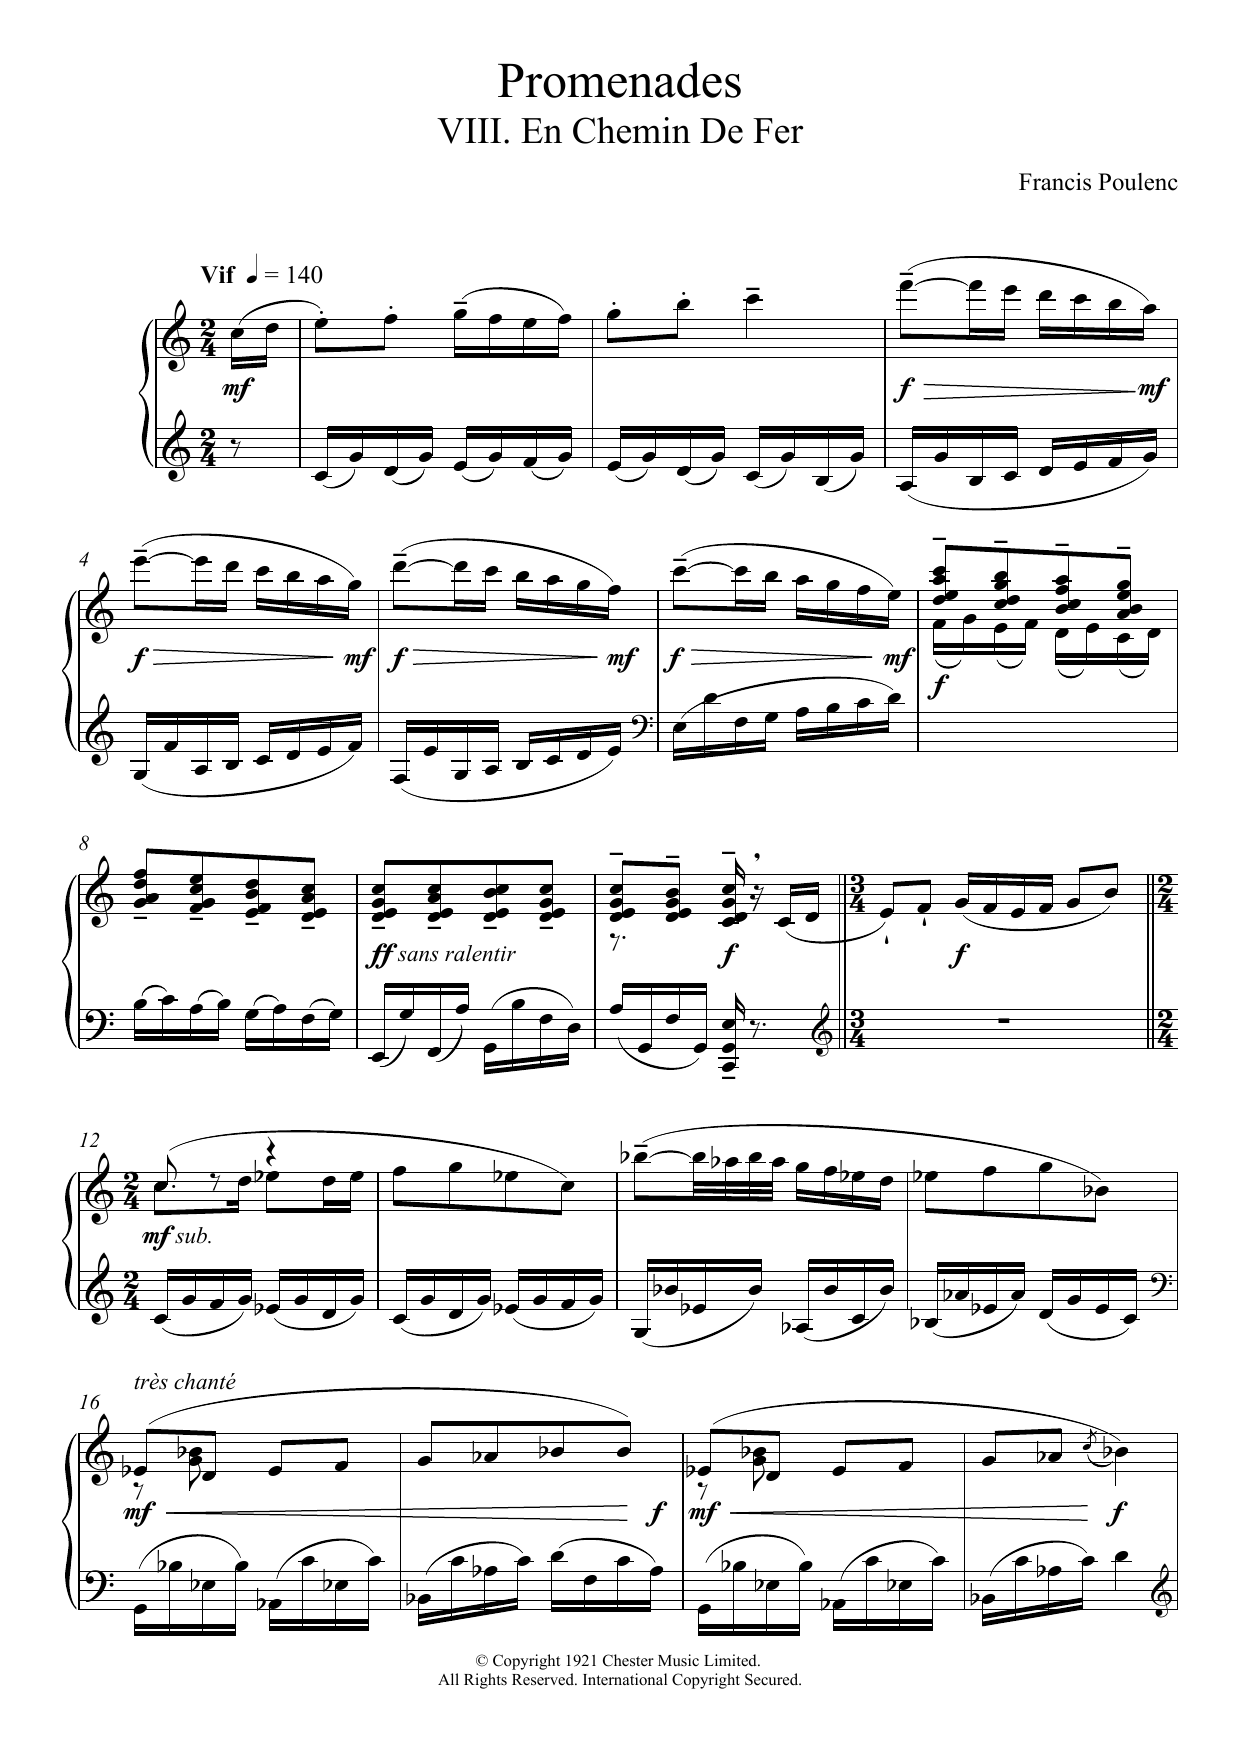 Francis Poulenc Promenades - VIII. En Chemin De Fer sheet music notes and chords arranged for Piano Solo